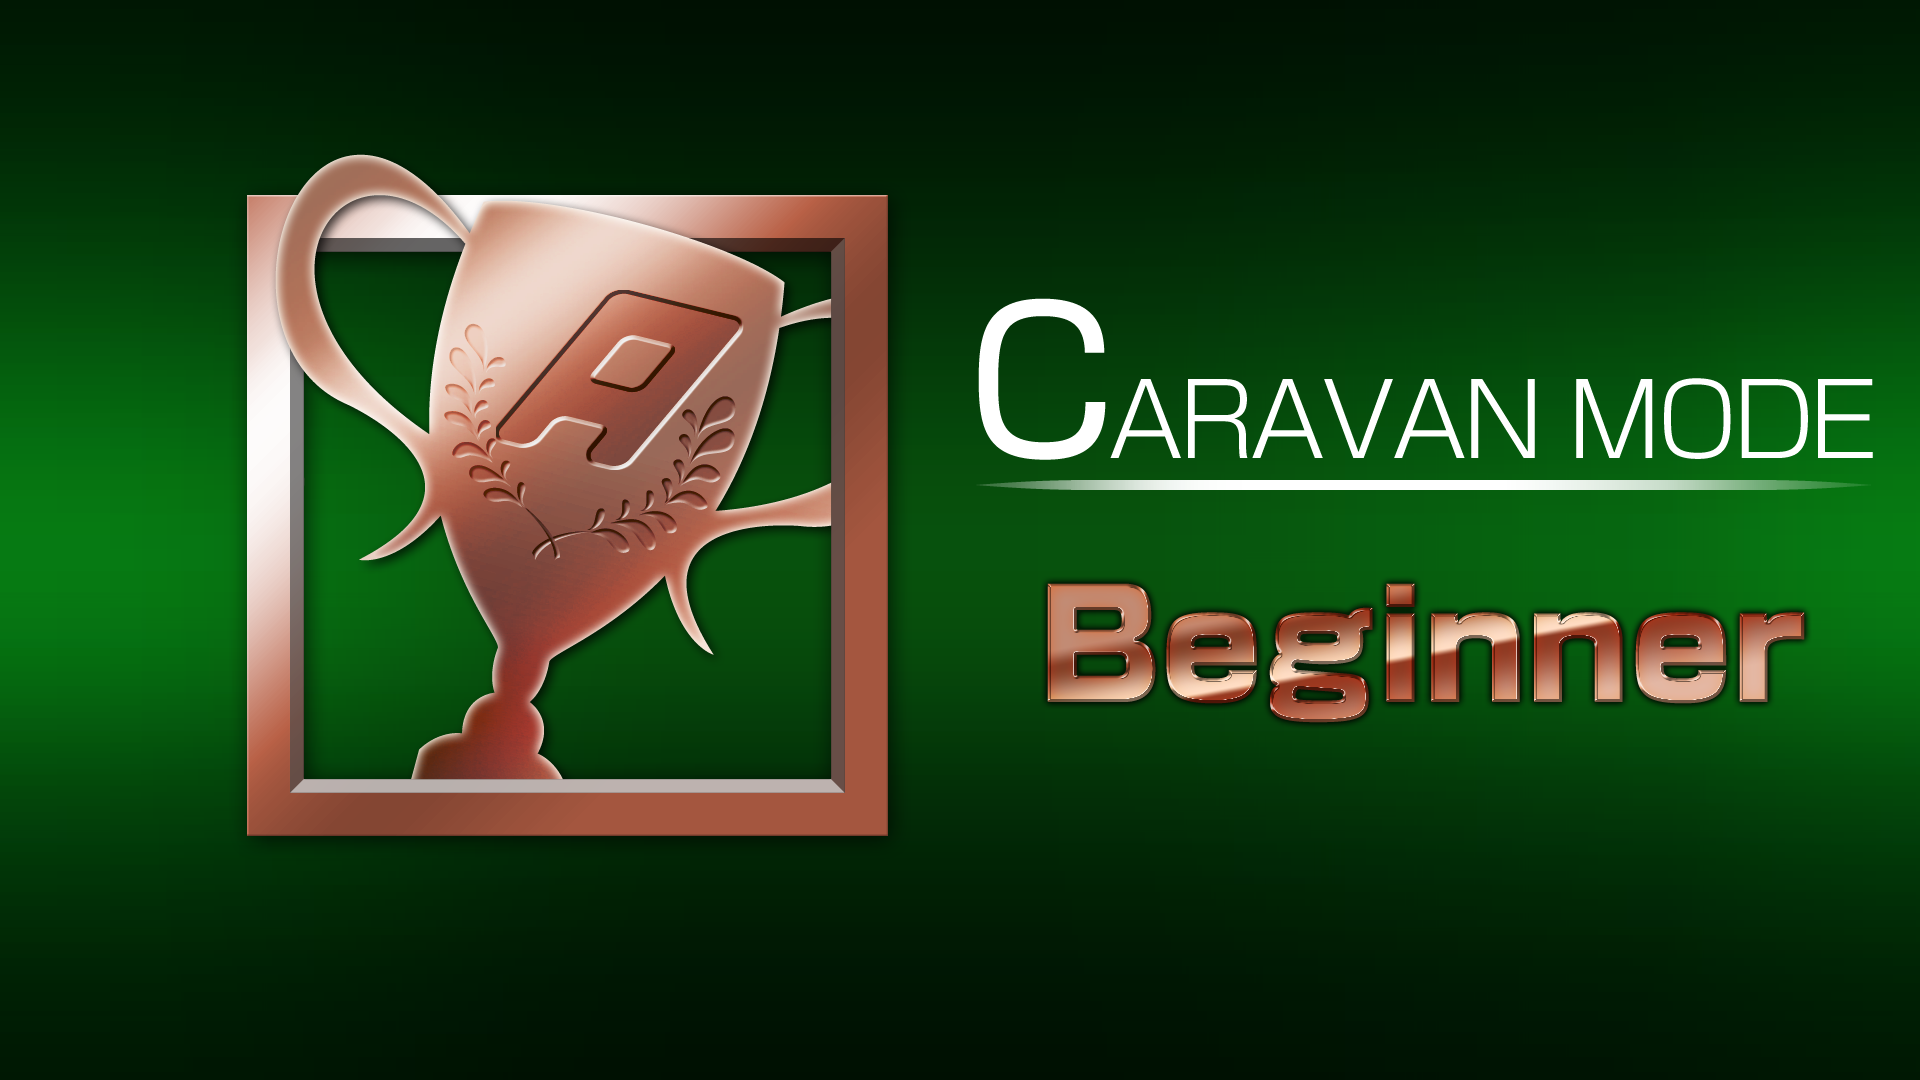 Icon for CARAVAN MODE 4 points